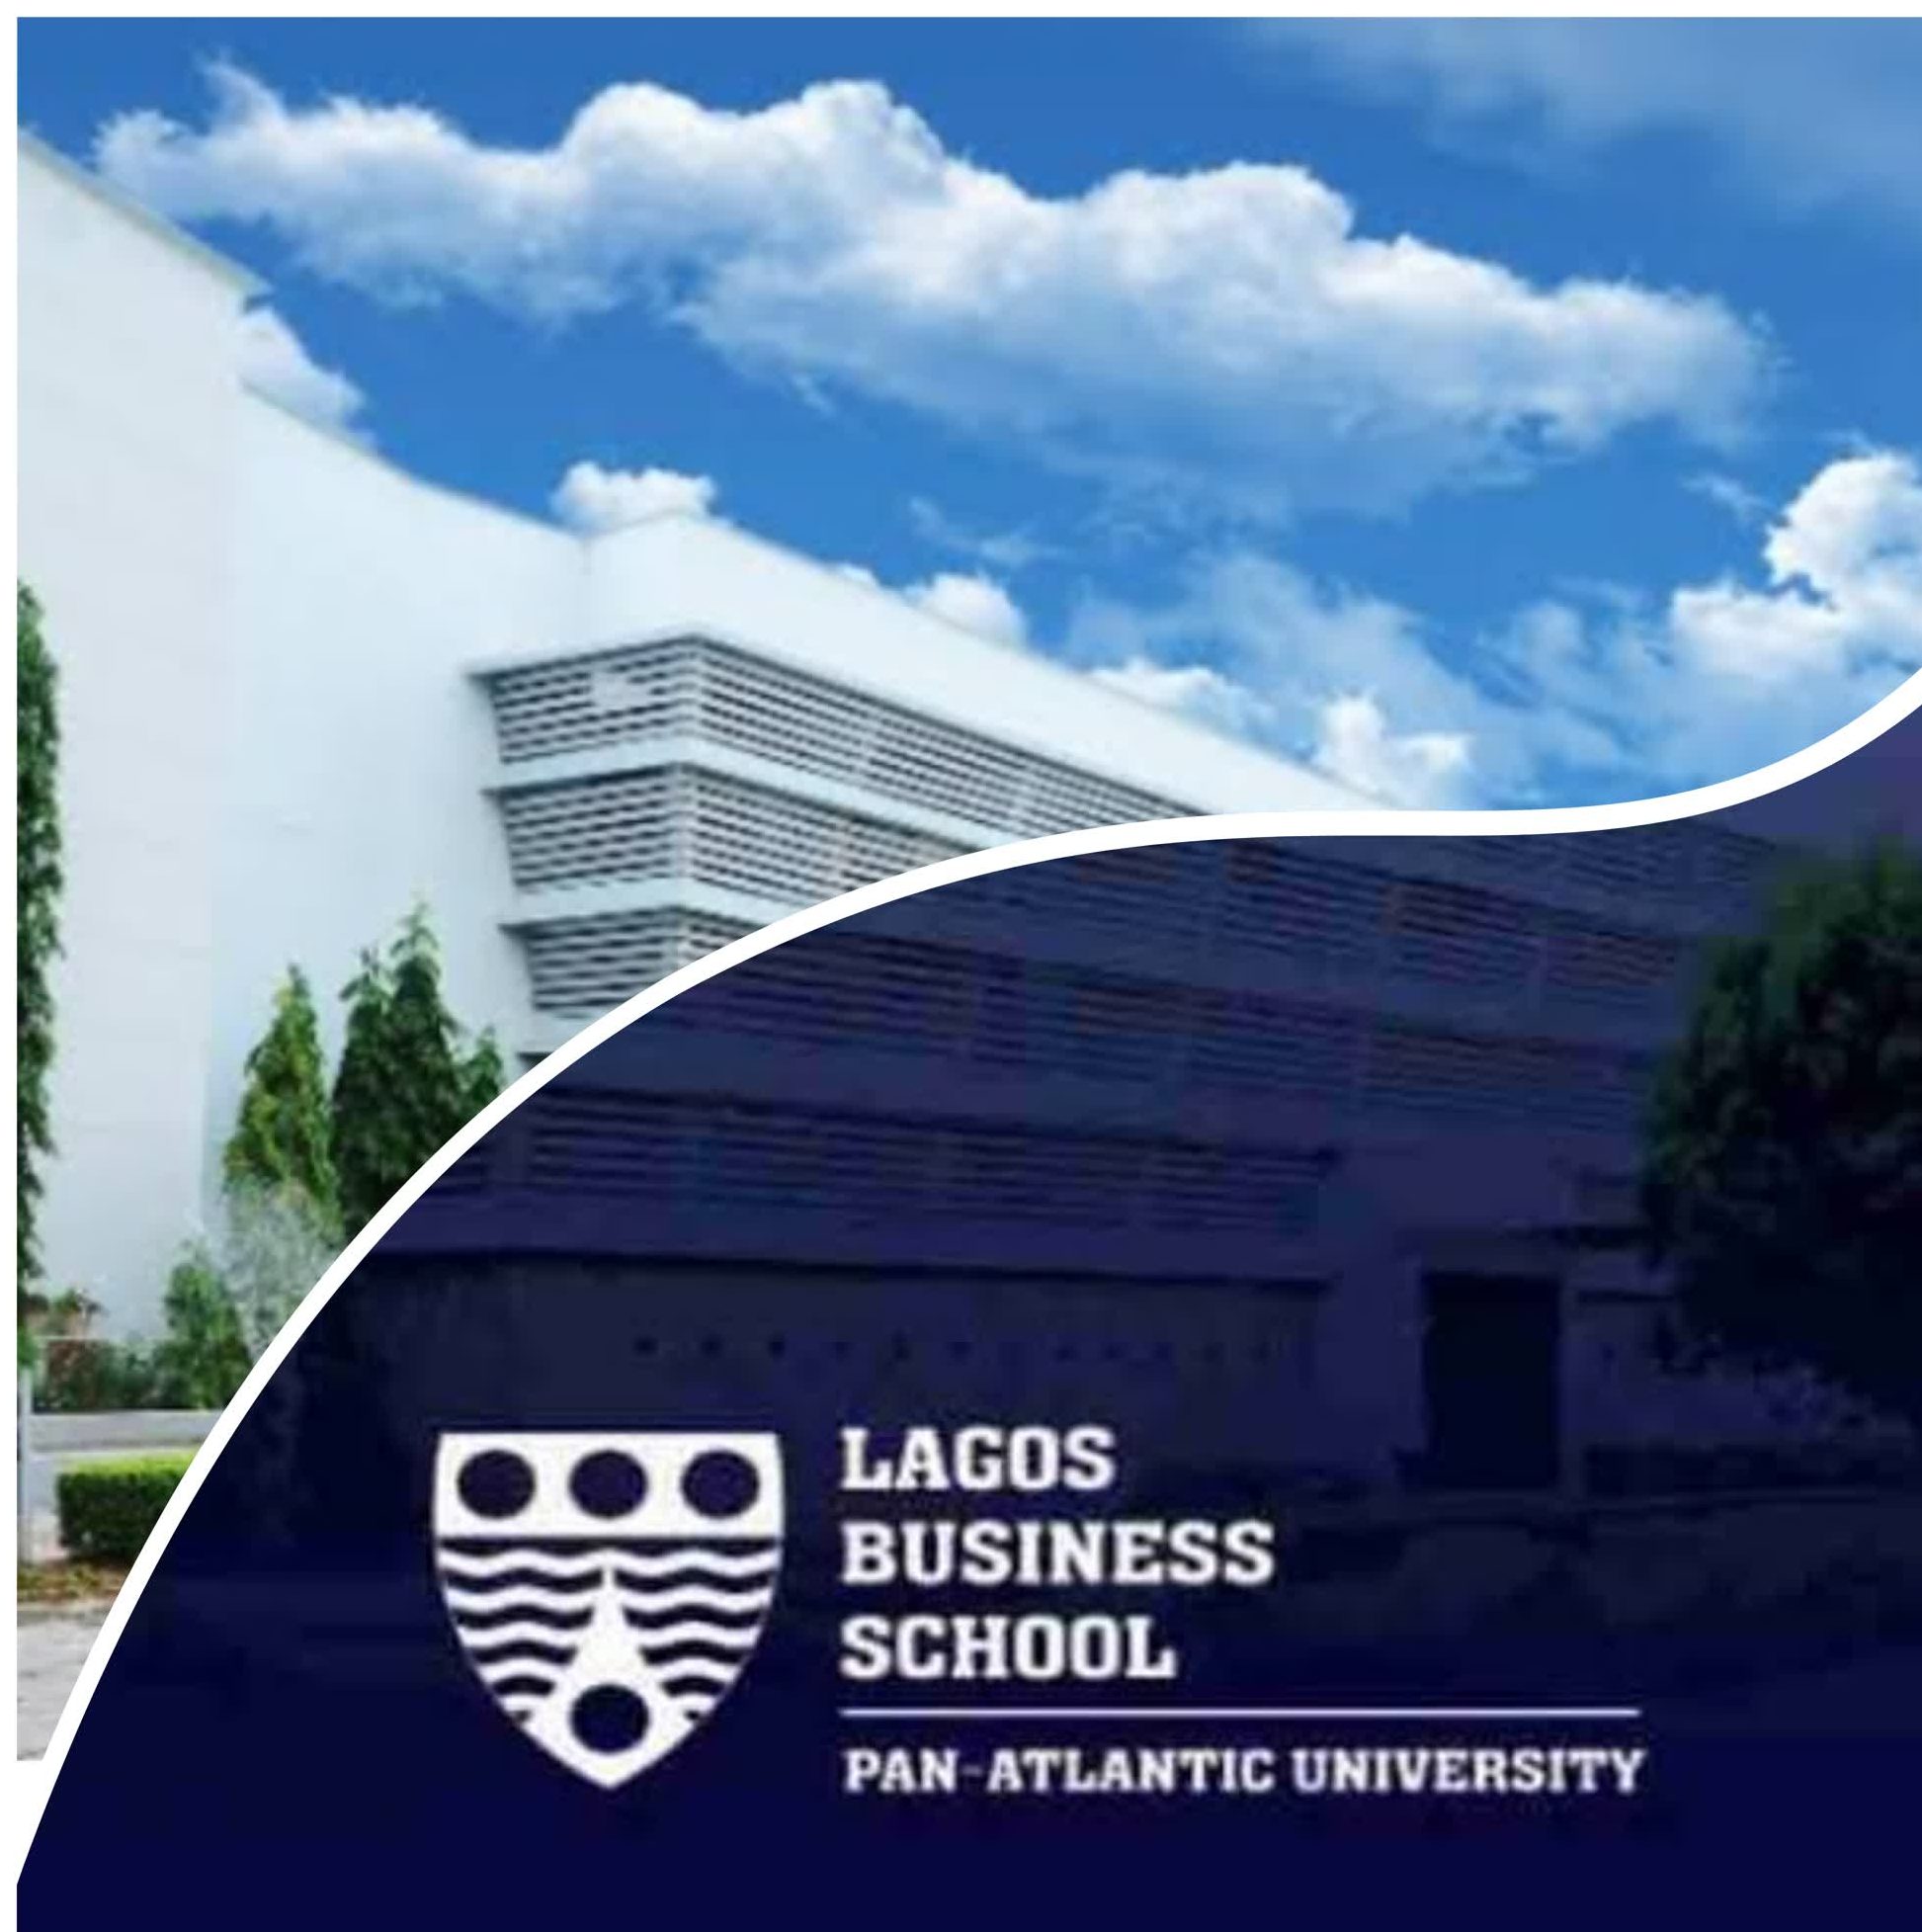 LAGOS BUSINESS SCHOOL